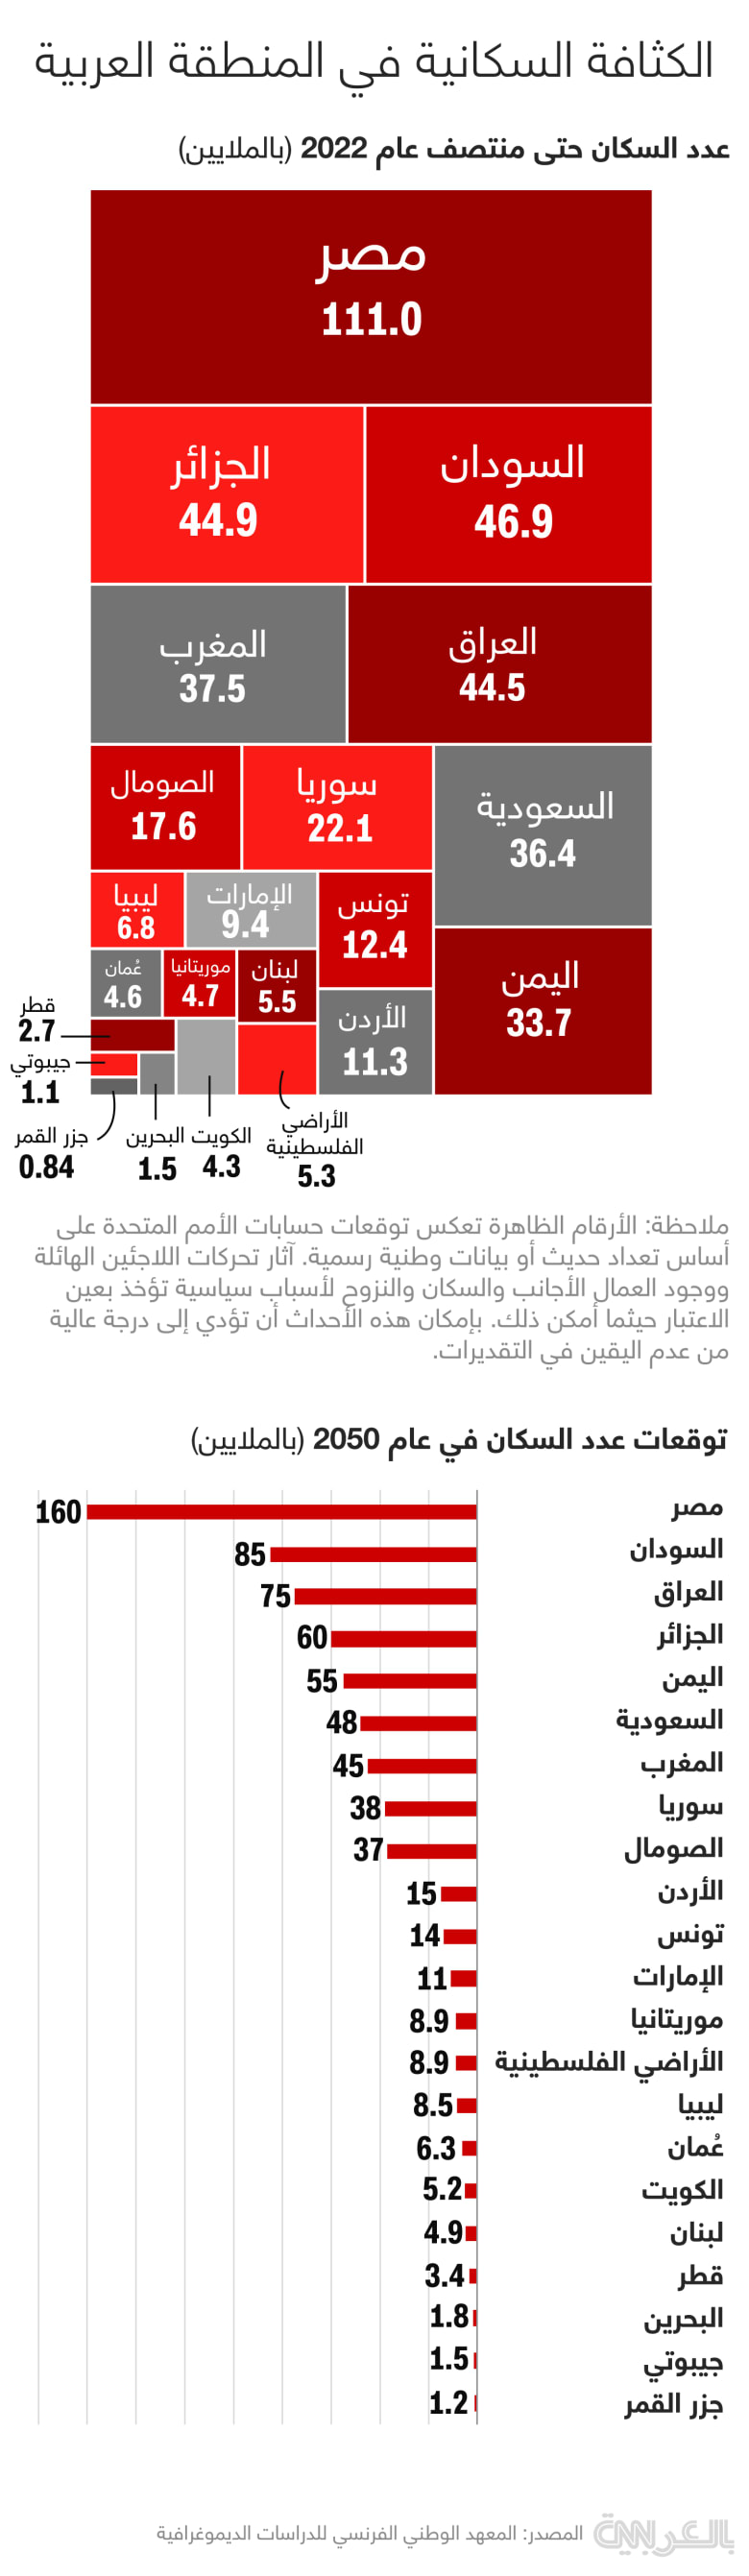 arab-population-comparison-2022-2050